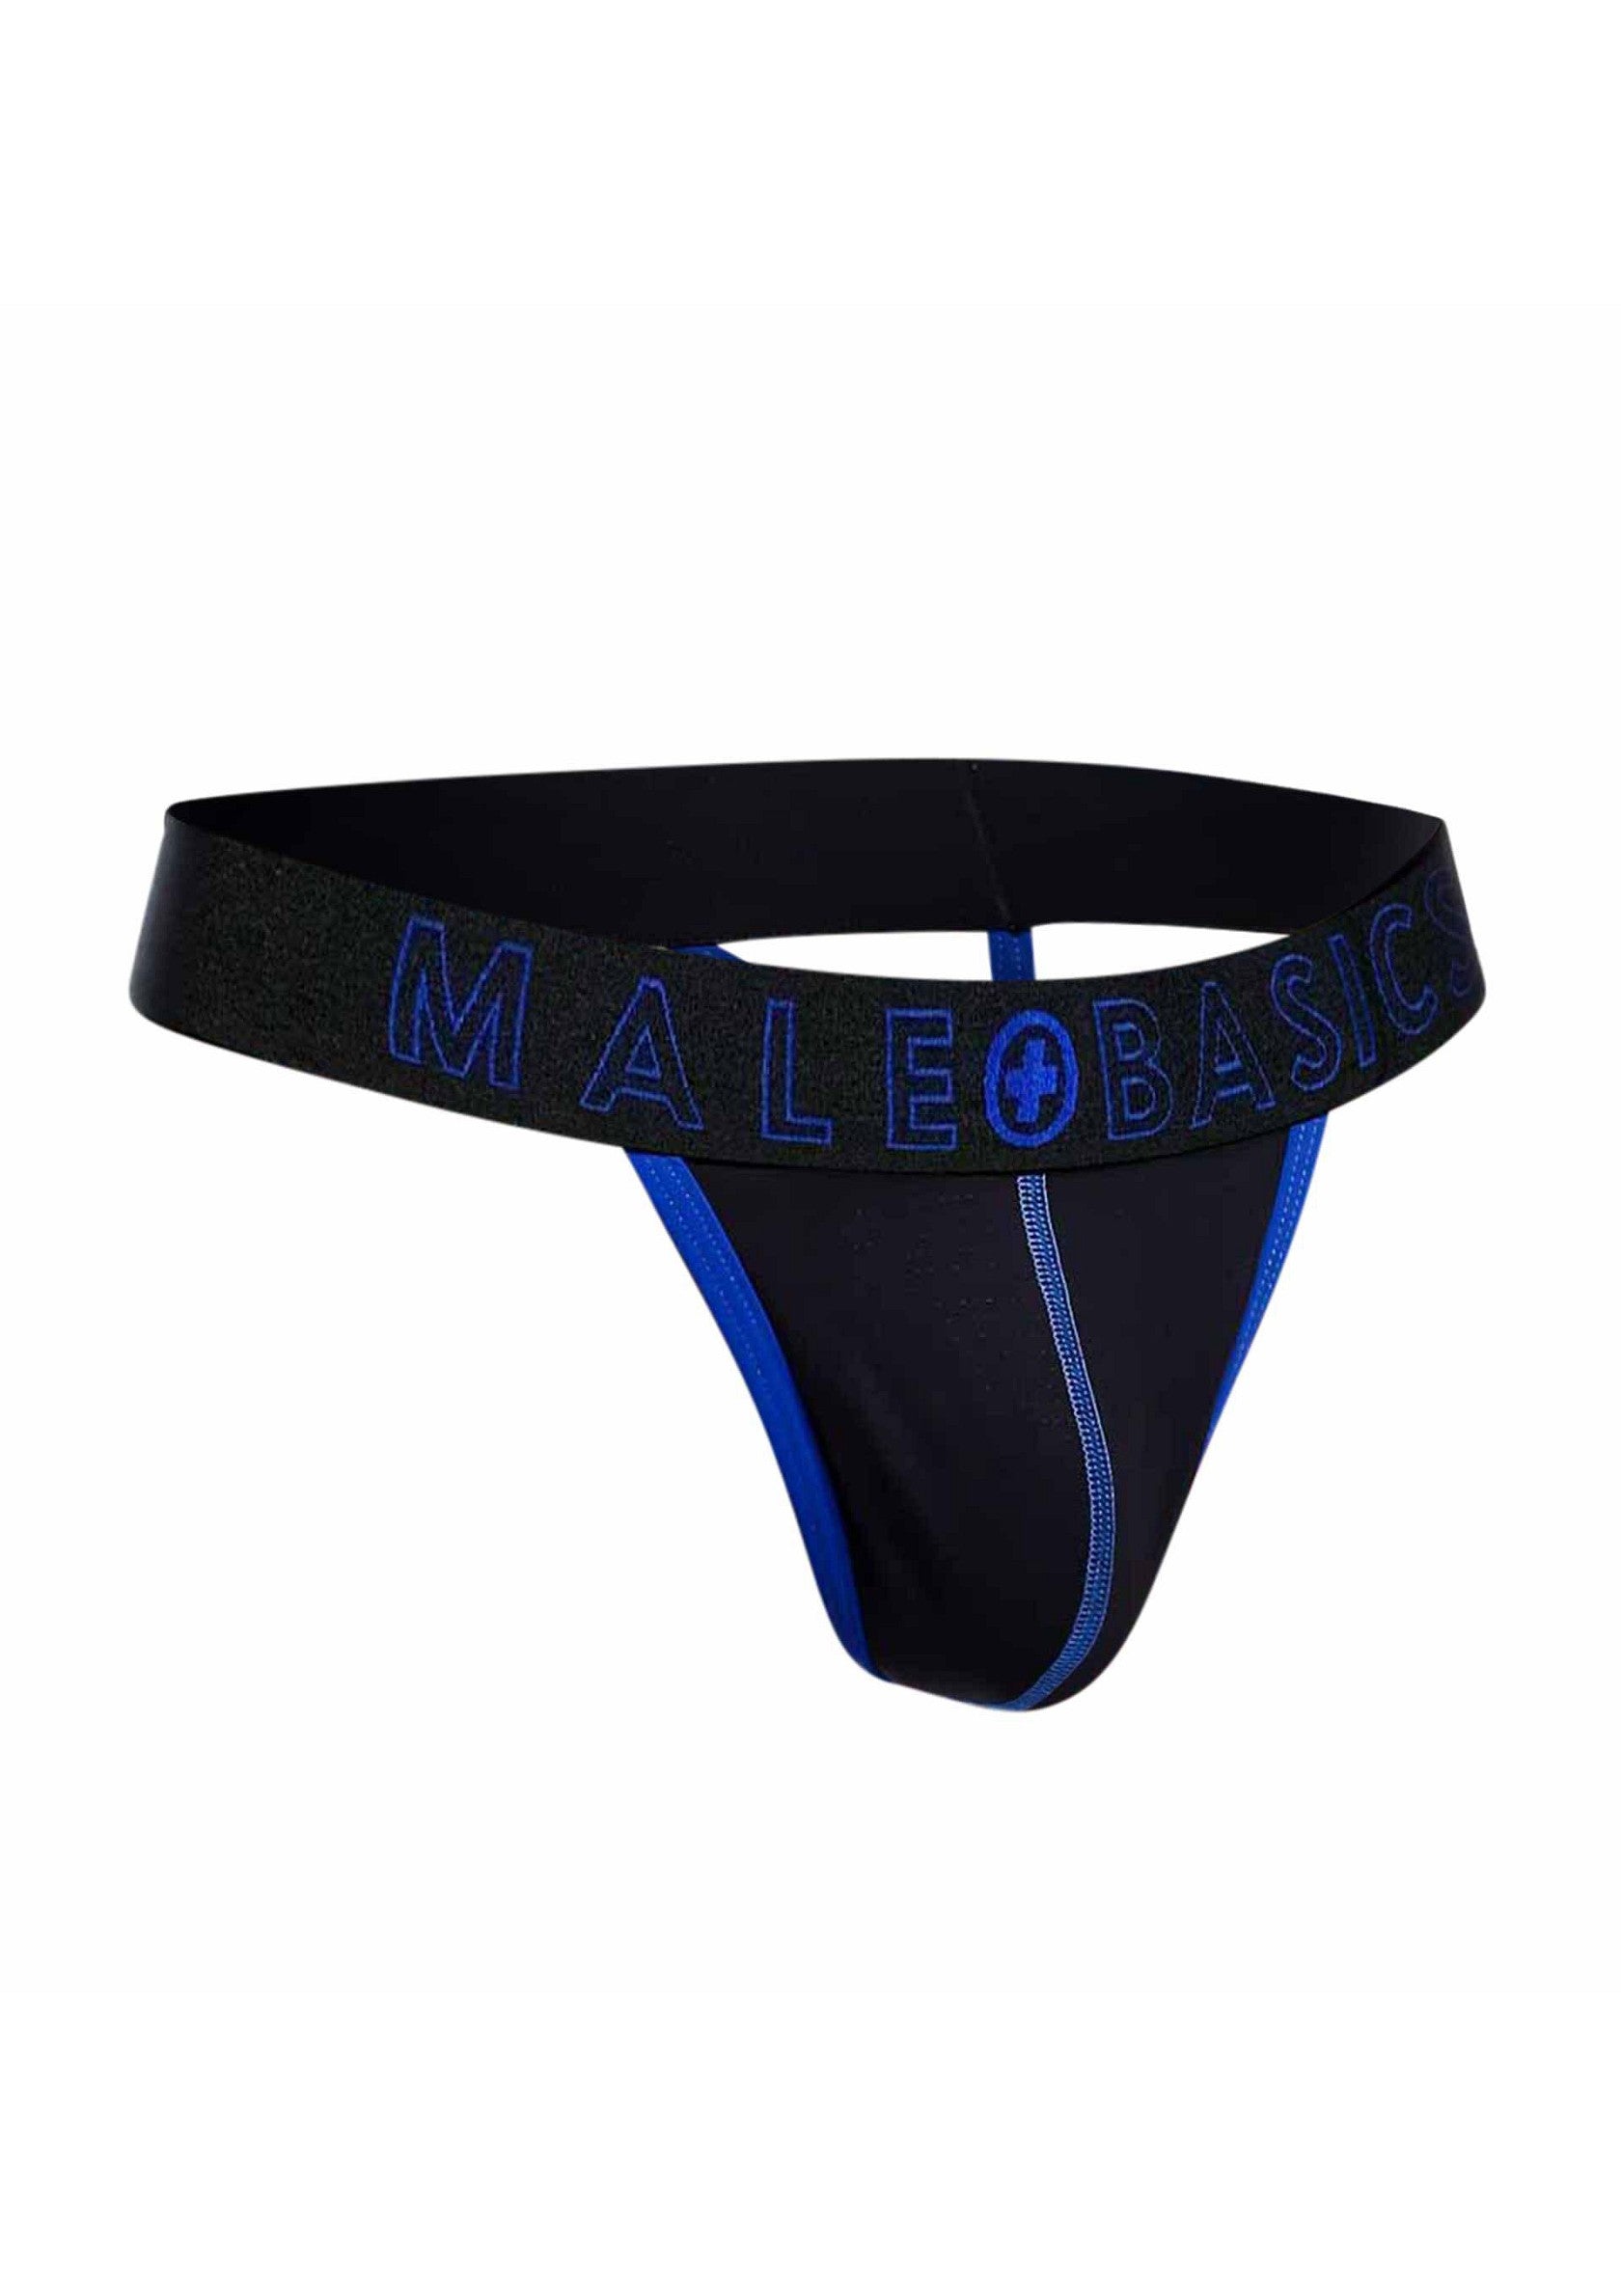 MaleBasics Neon Thong BLUE S - 2